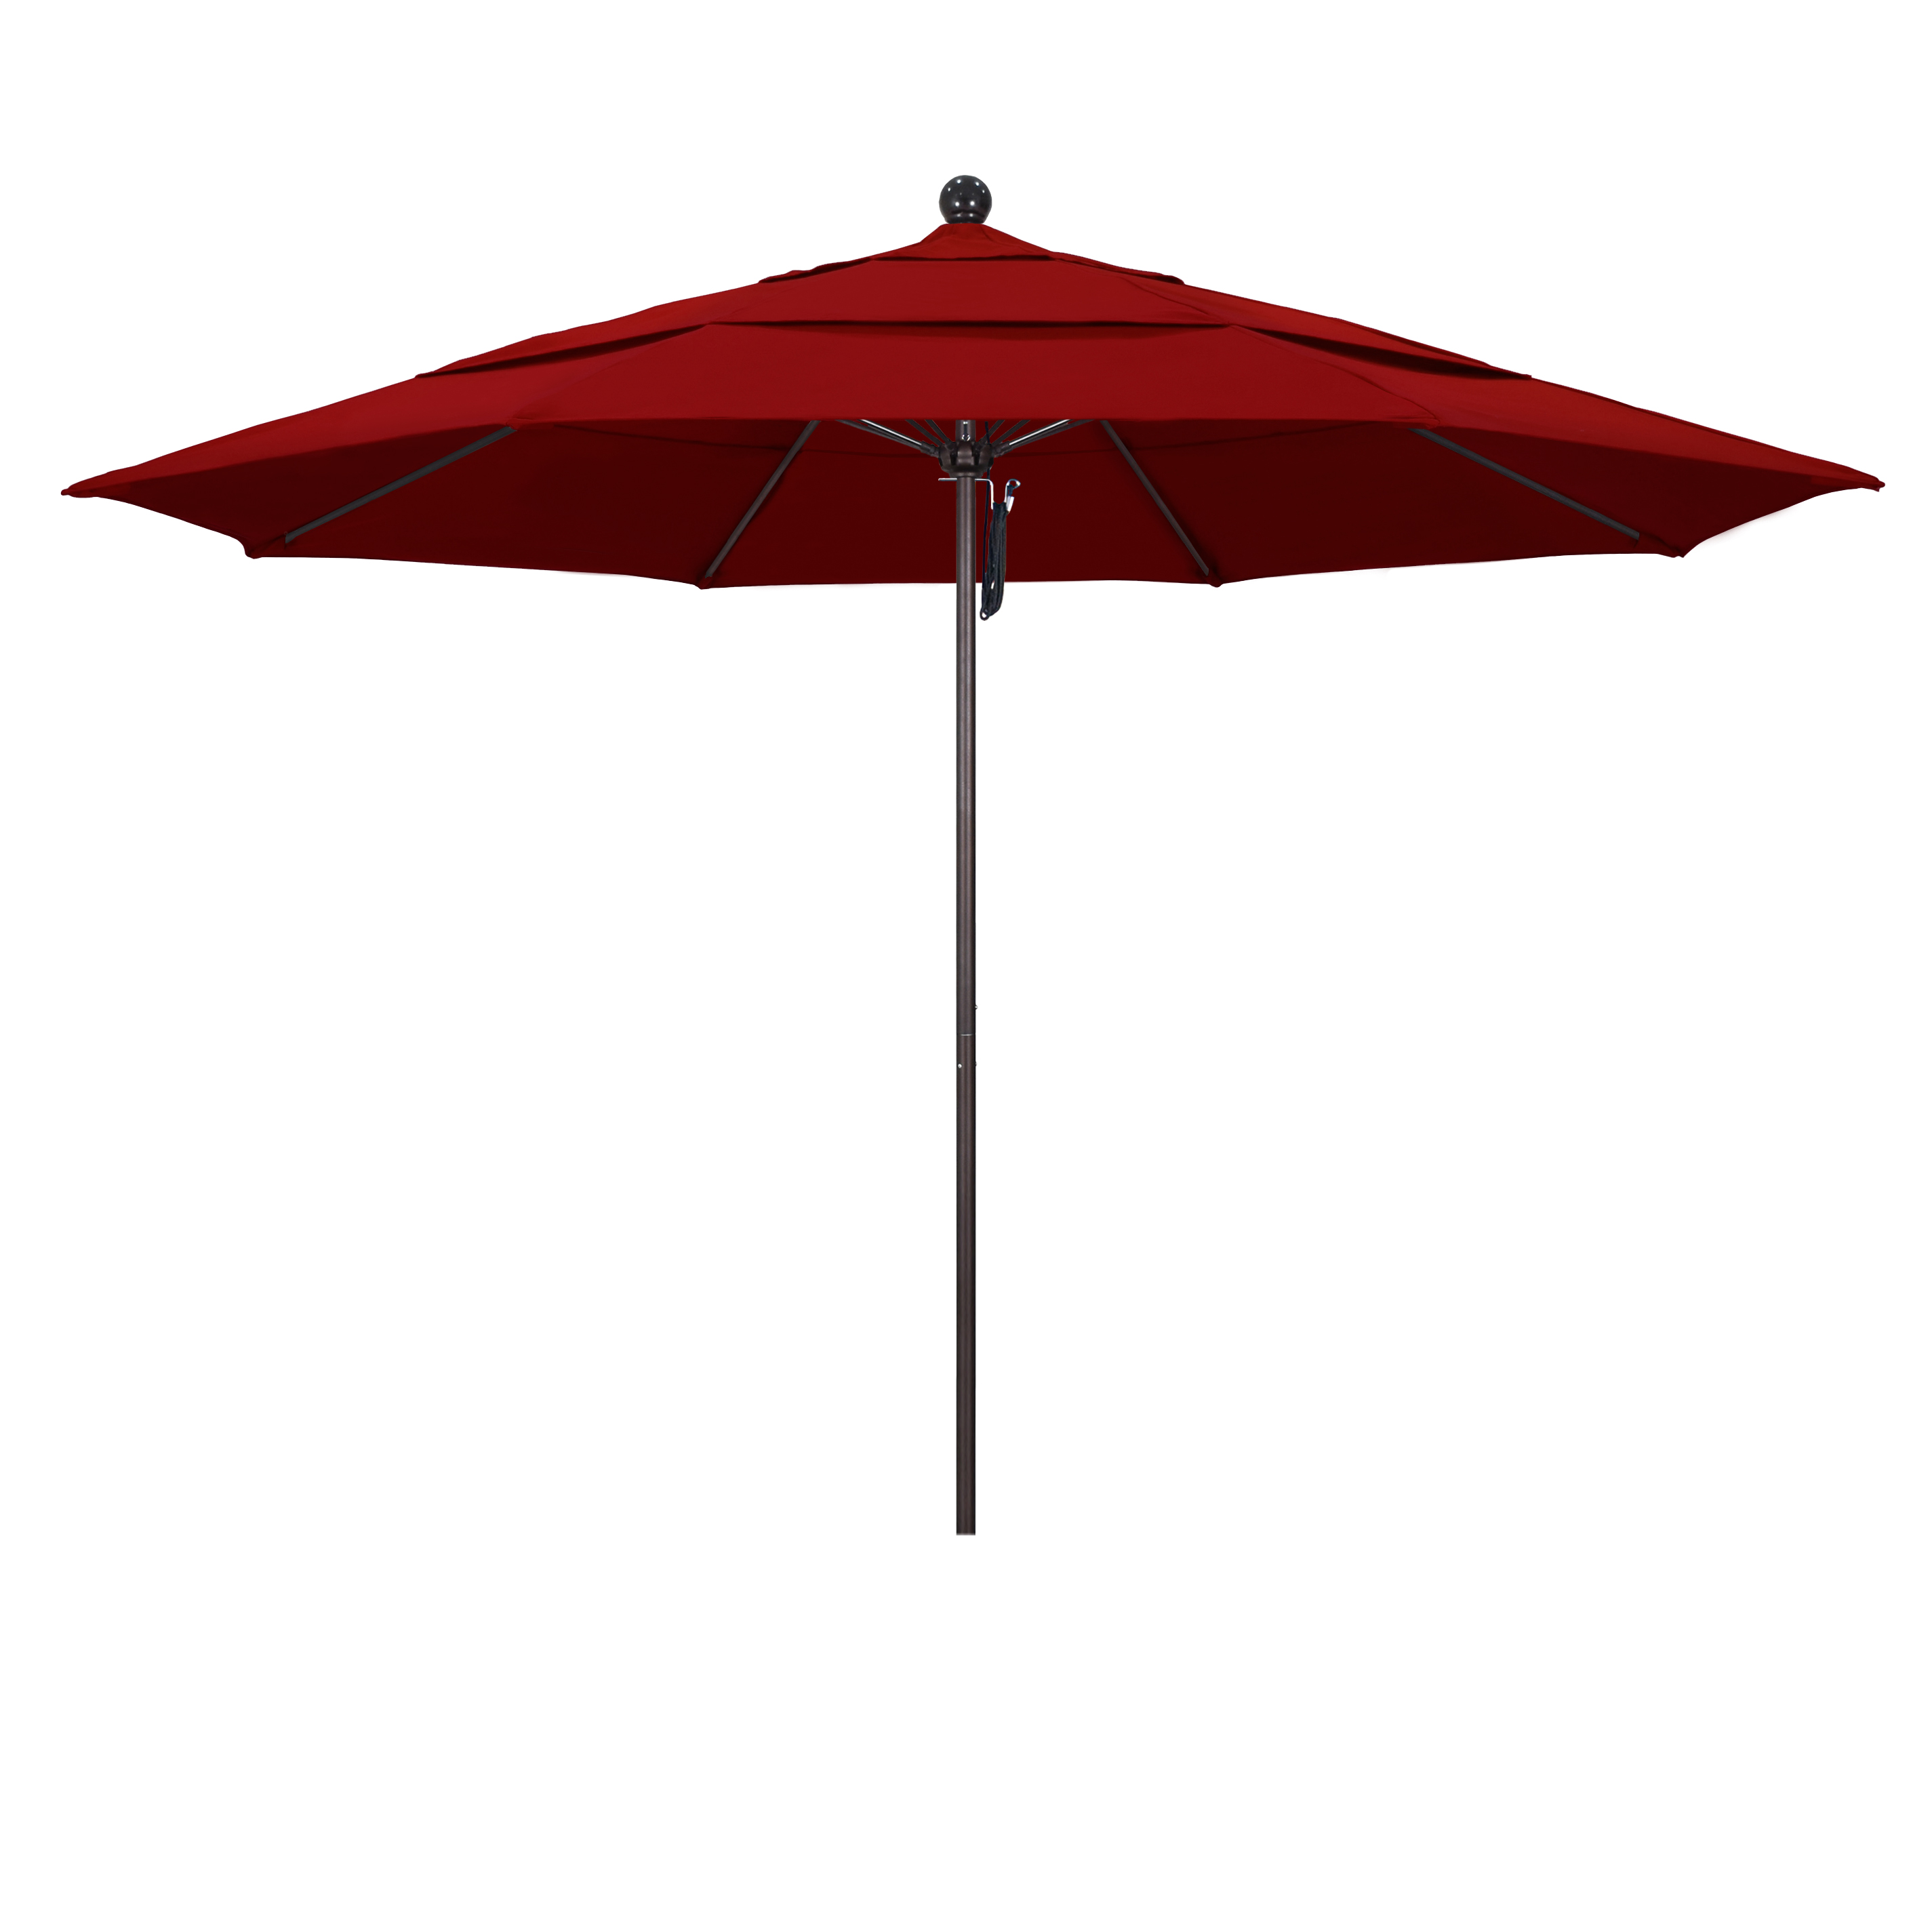 Picture of California Umbrella ALTO118117-5403-DWV 11 ft. Fiberglass Pulley Open Double Vents Market Umbrella - Bronze and Sunbrella-Jockey Red